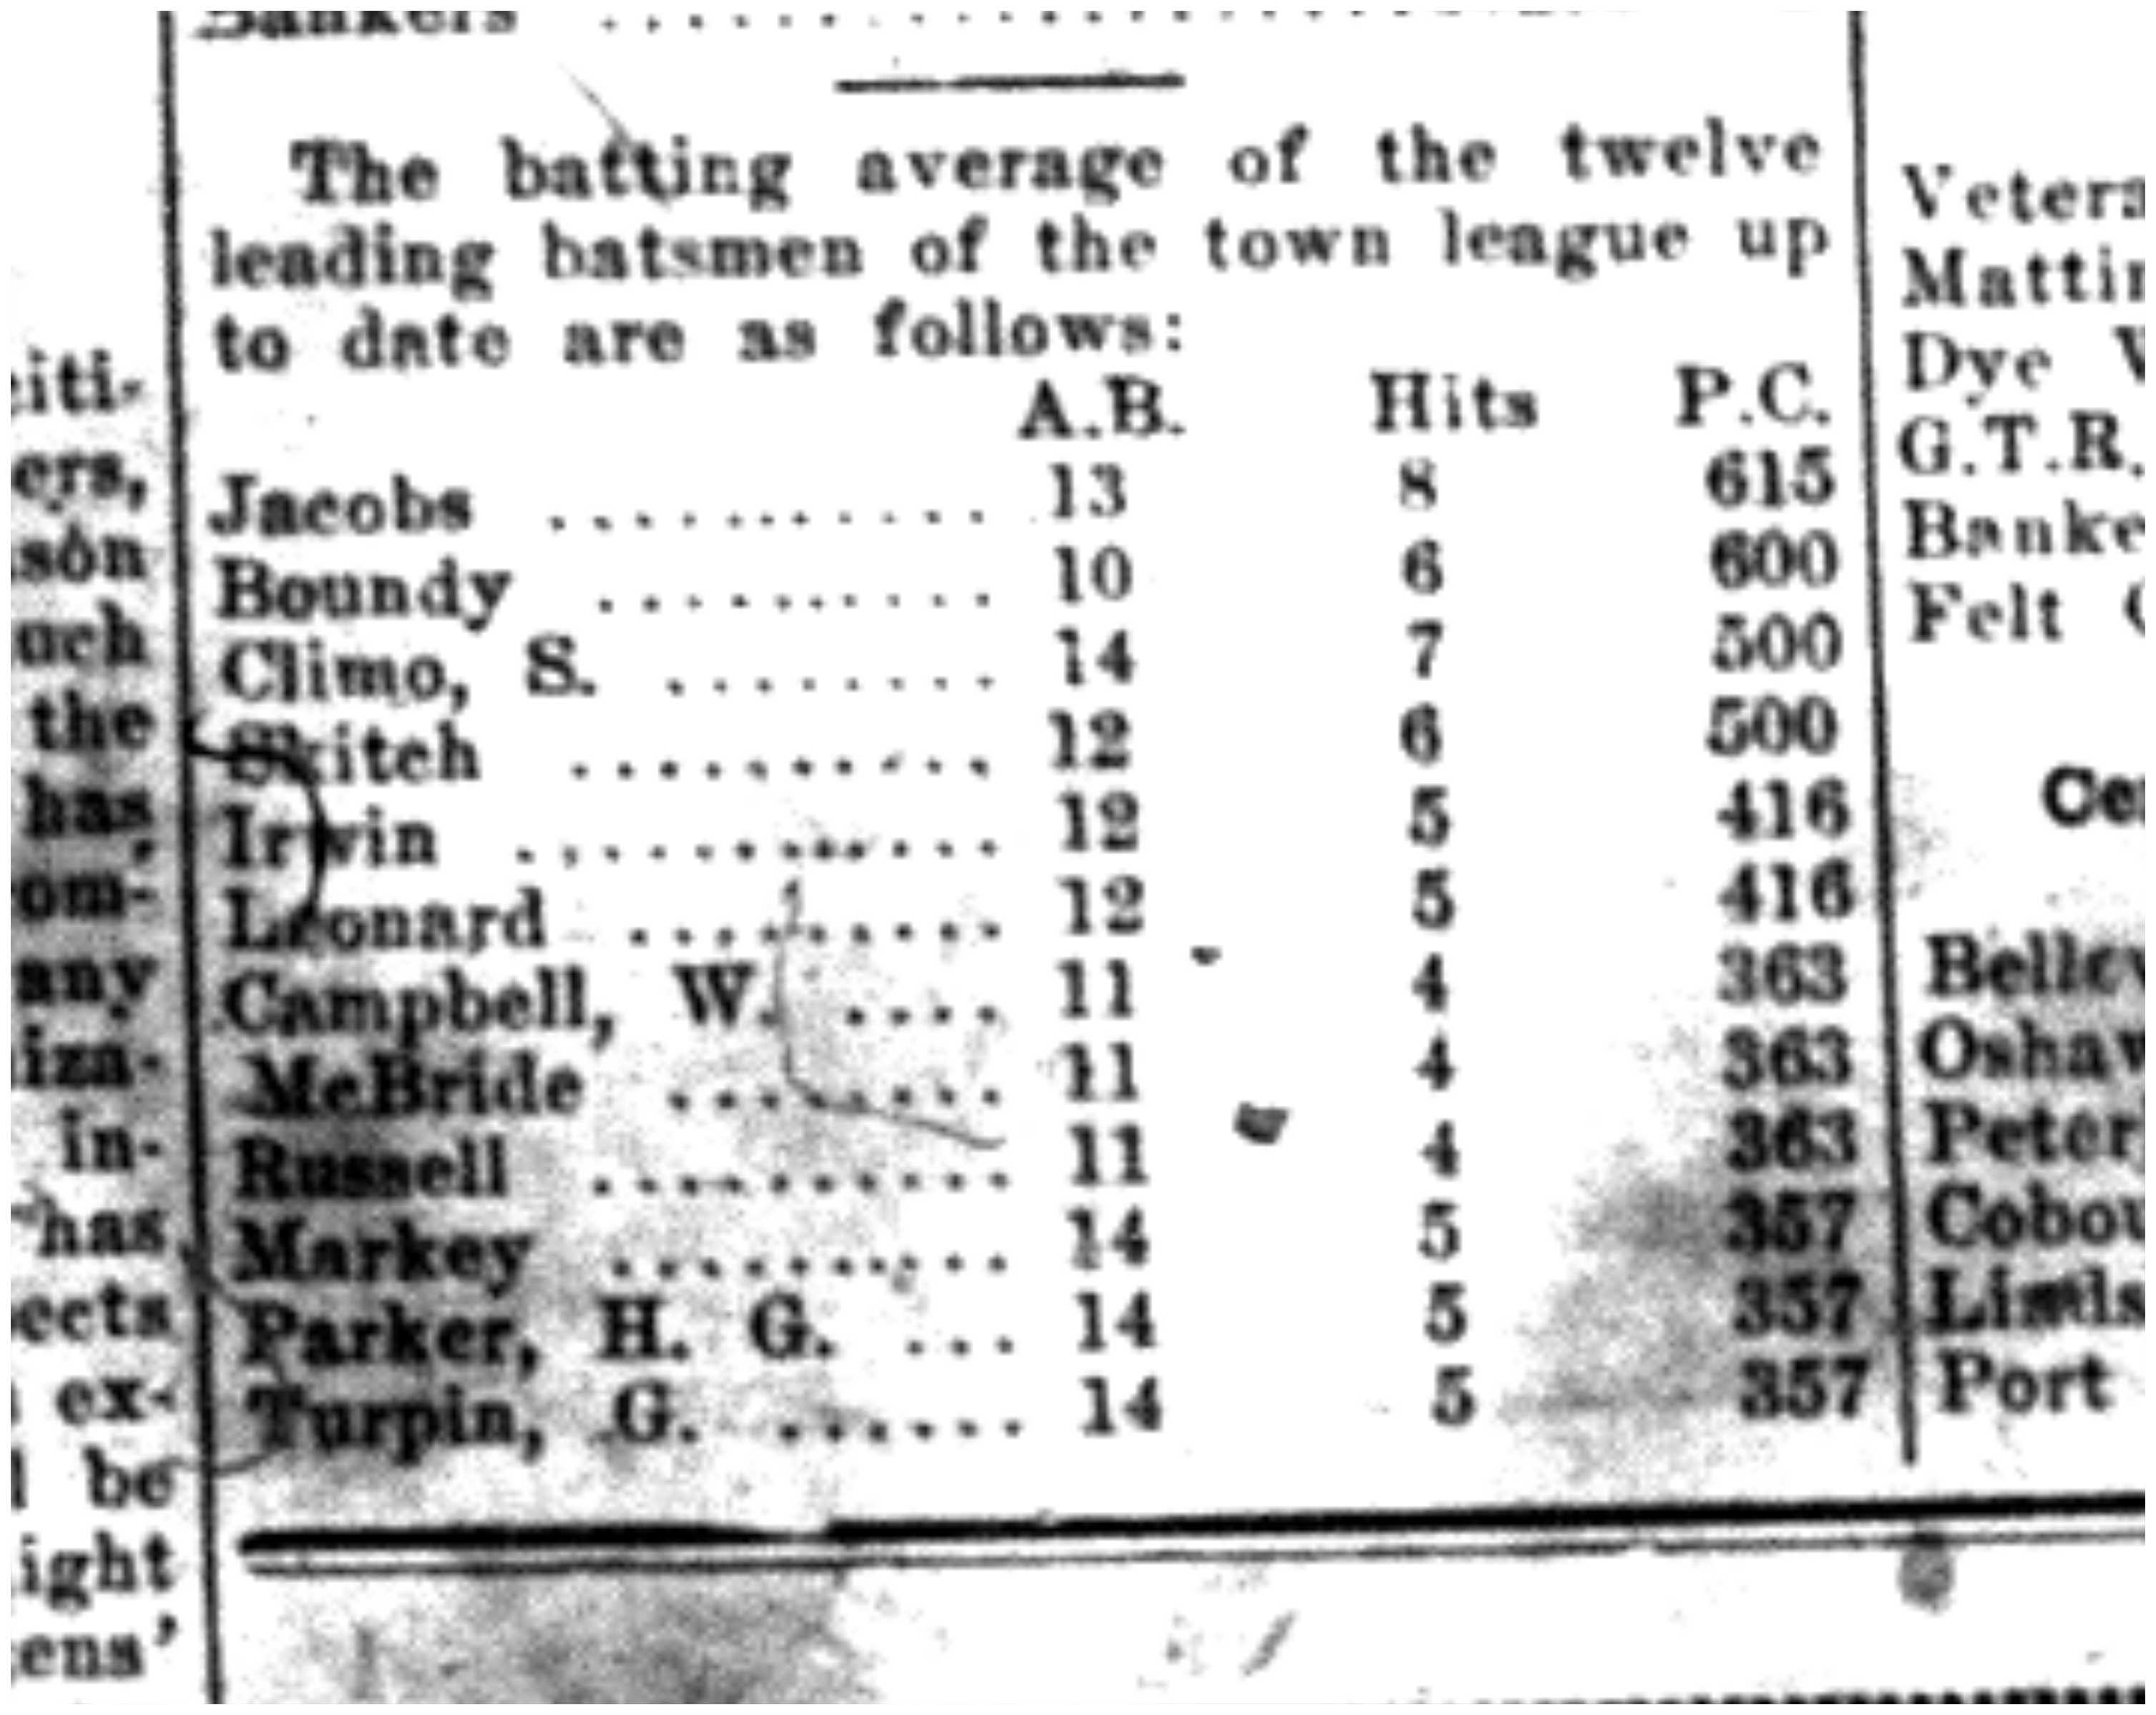 1920-06-17 Baseball -Batting averages